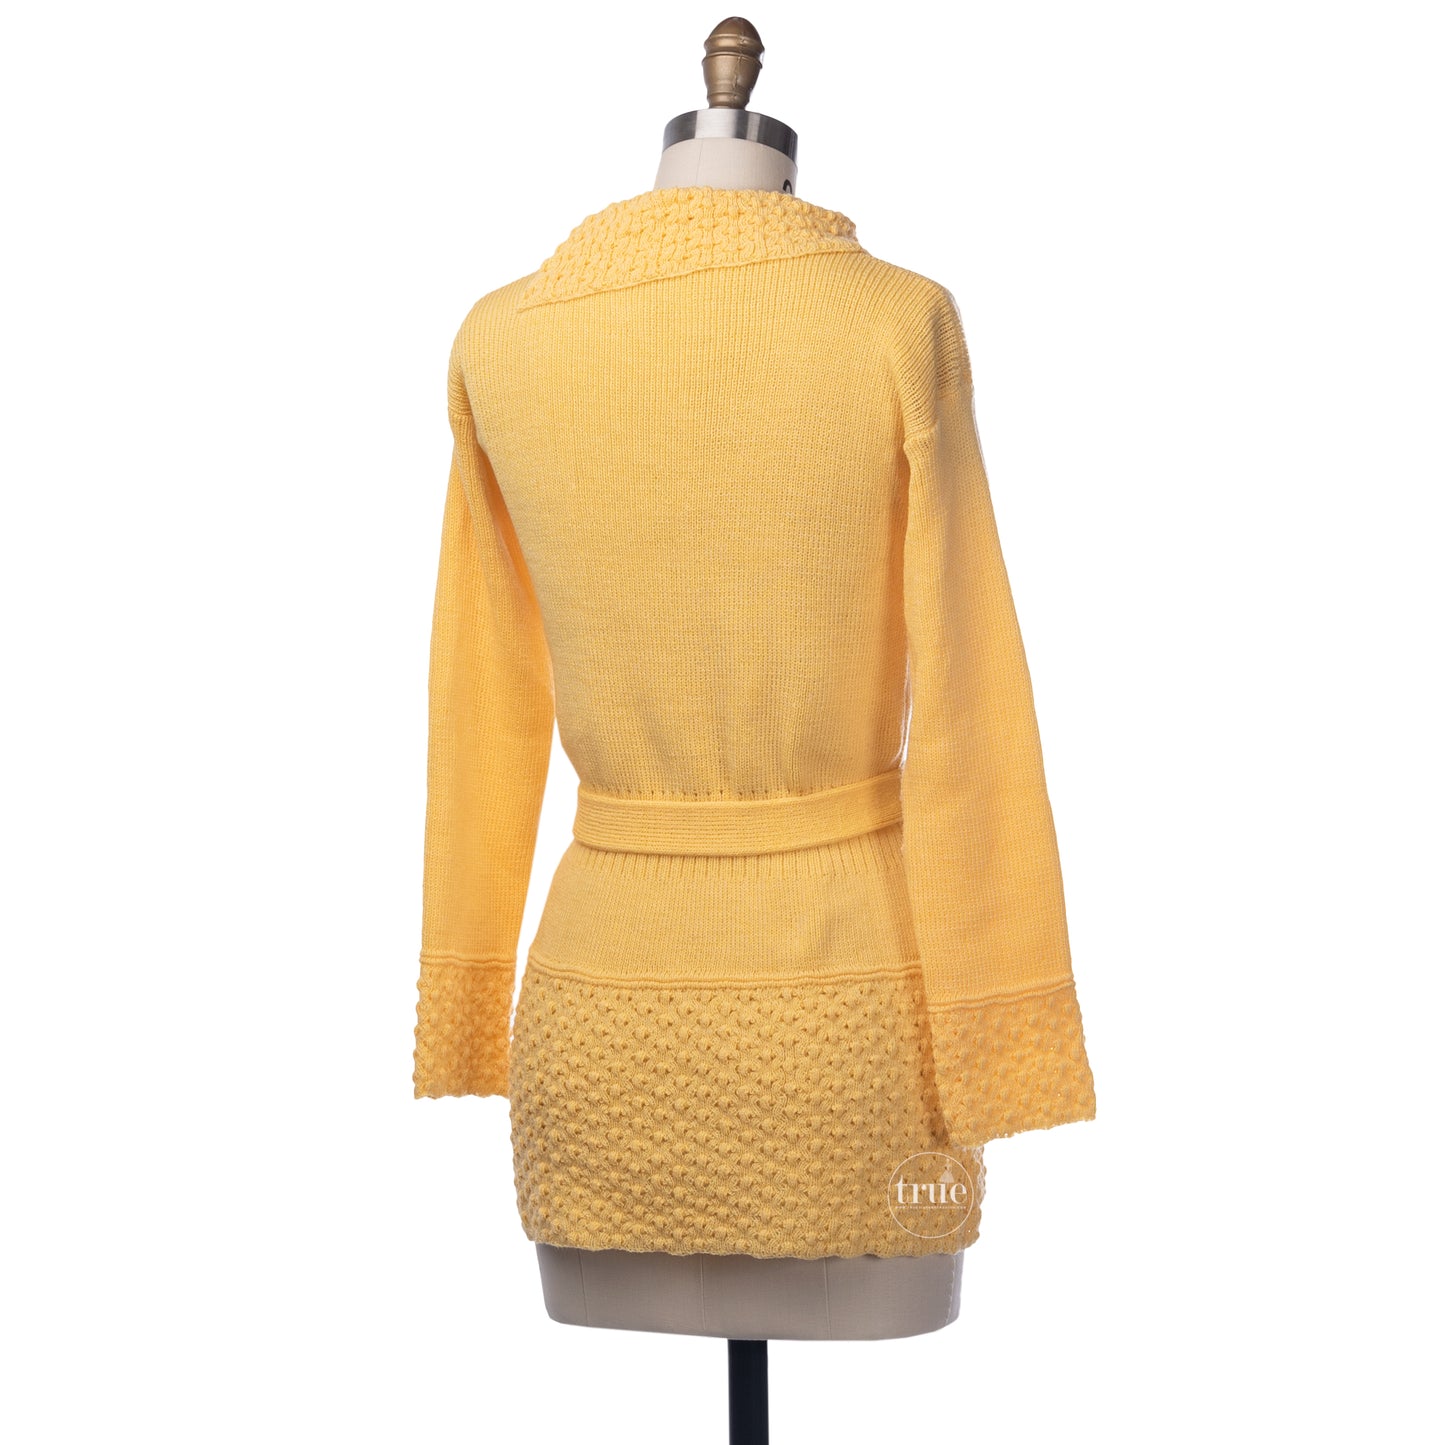 vintage 1930's sweater ...fabulous dandelion yellow hand knit asymmetrical fold down collar